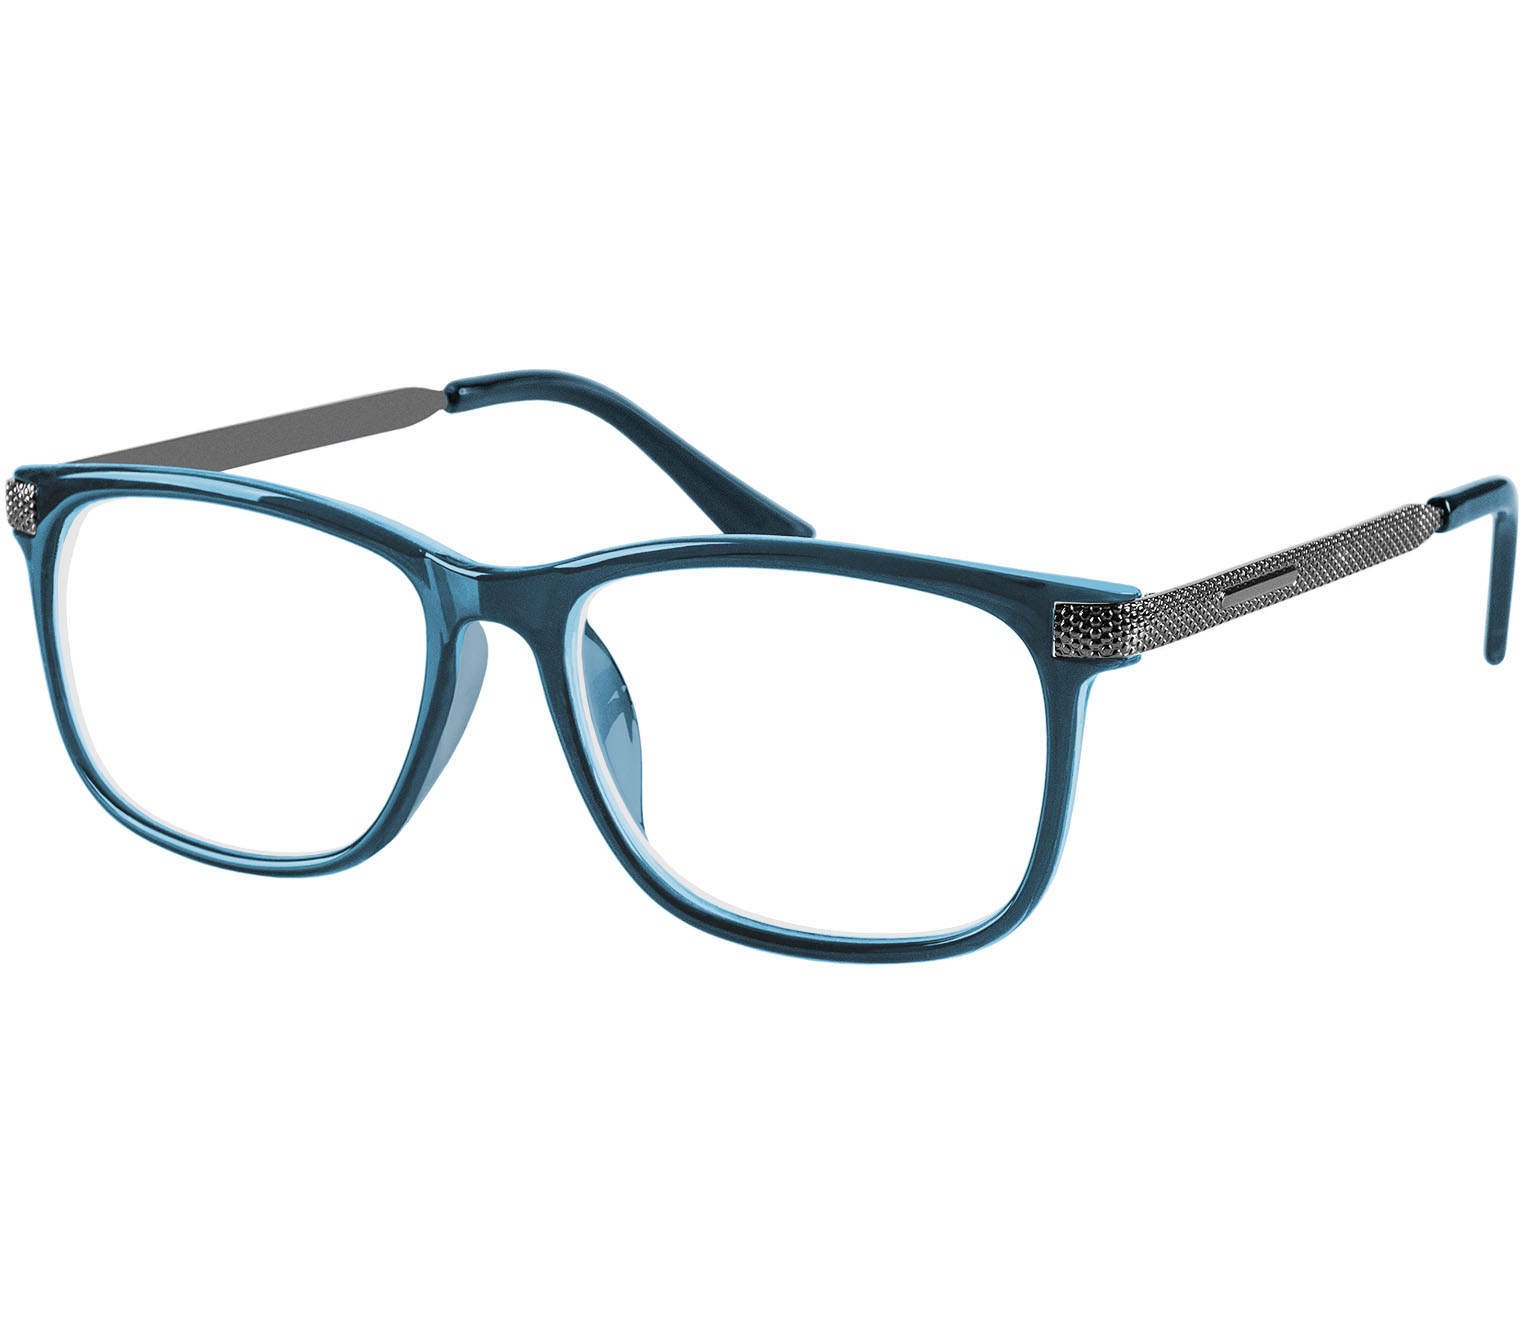 Main Image (Angle) - Lima (Blue) Classic Reading Glasses